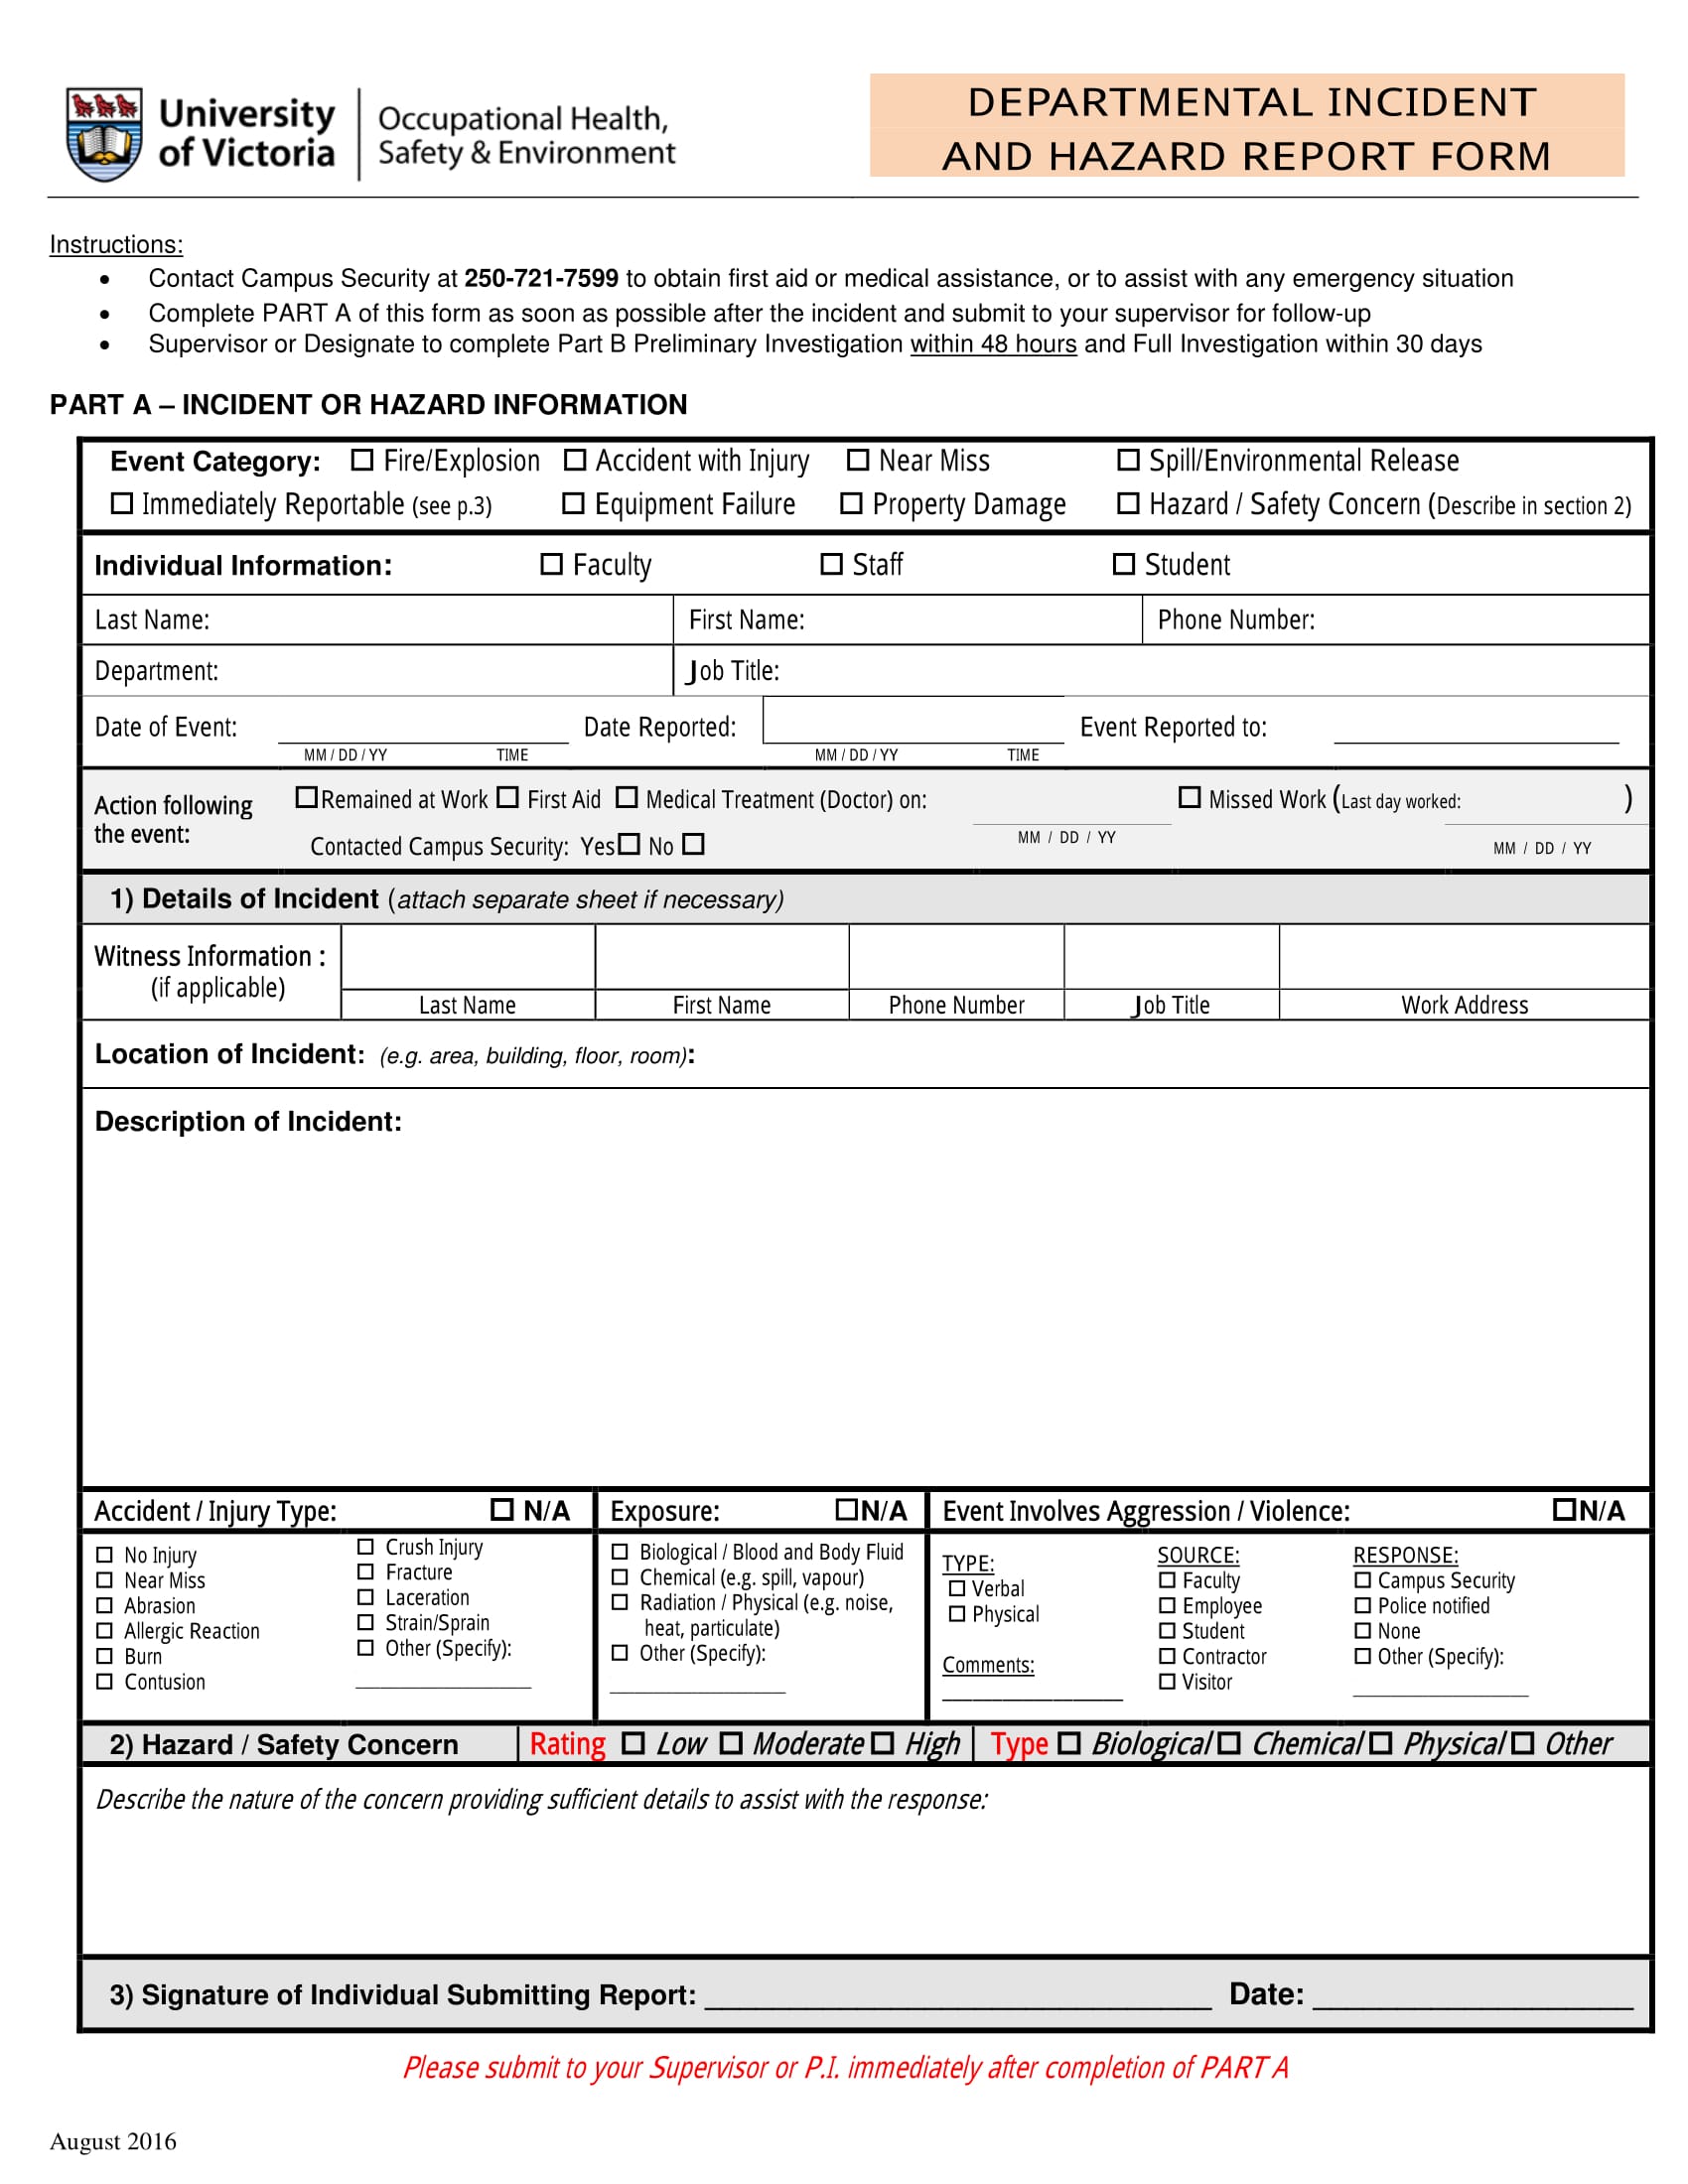 departmental incident and hazard report form 1